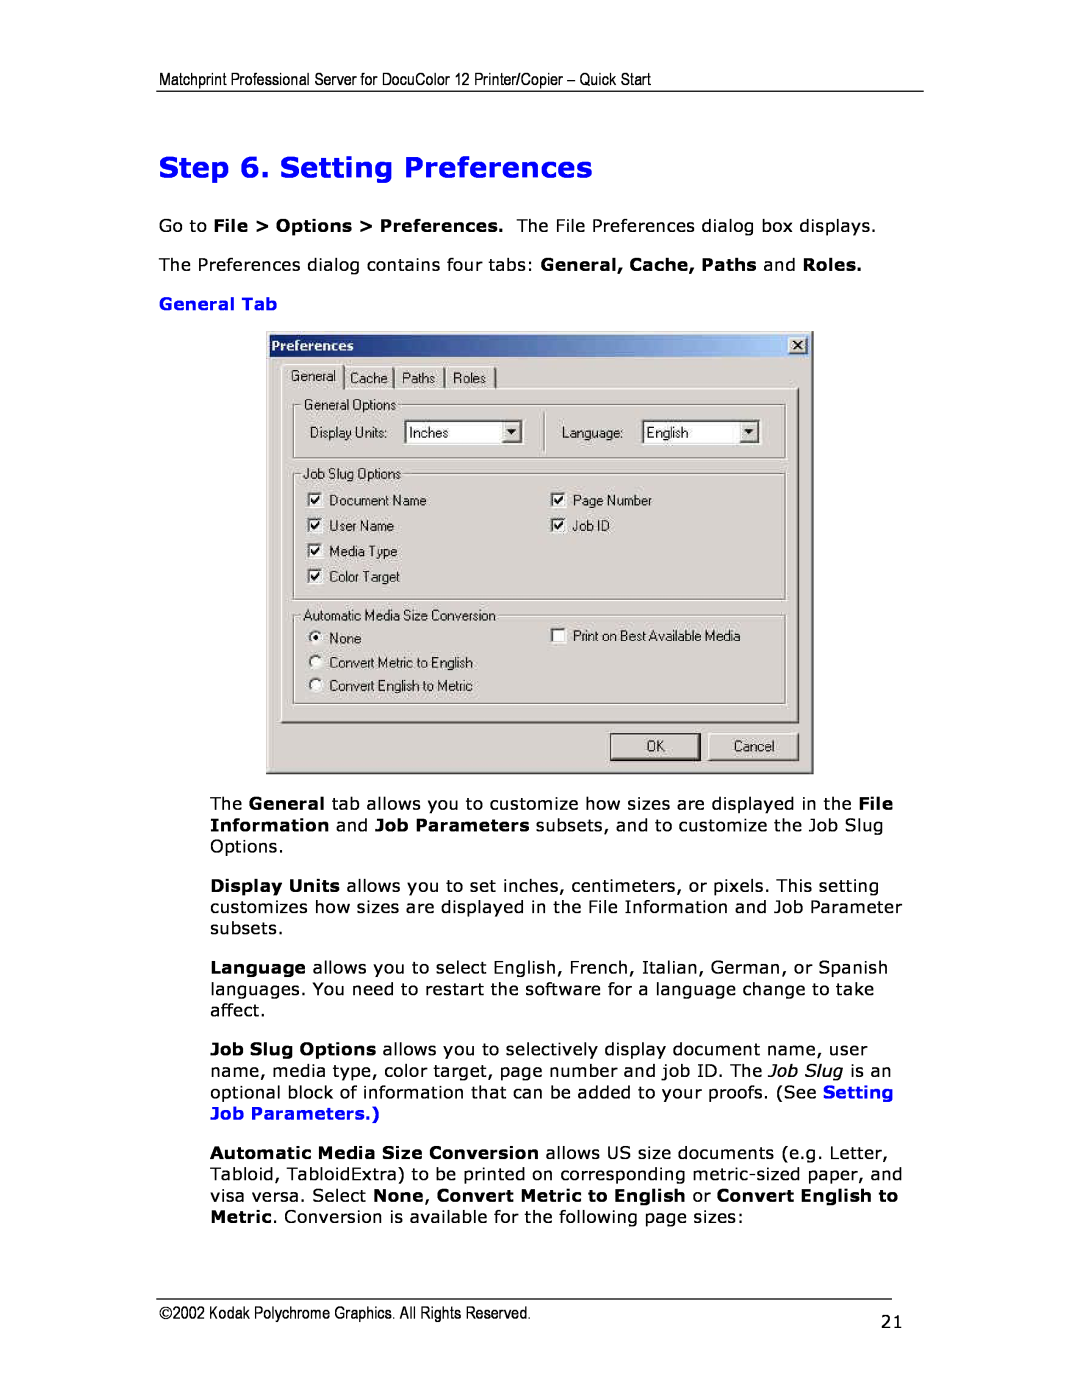 Kodak KY0730485 quick start Setting Preferences, General Tab, Job Parameters 